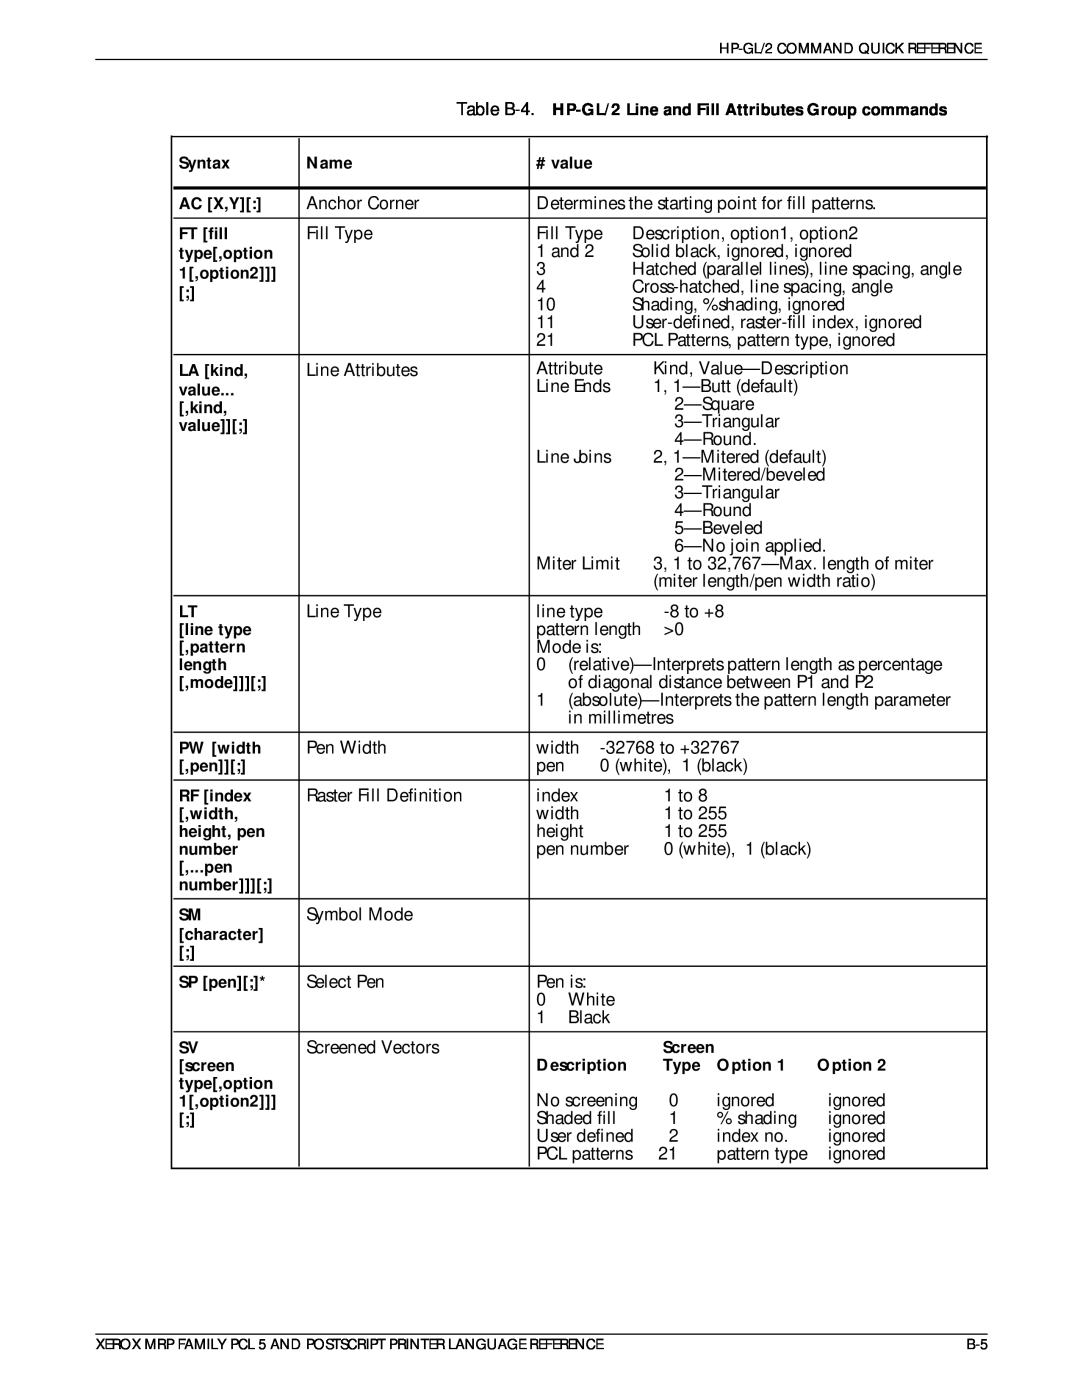 Xerox 4215/MRP manual Screen, PCL patterns 